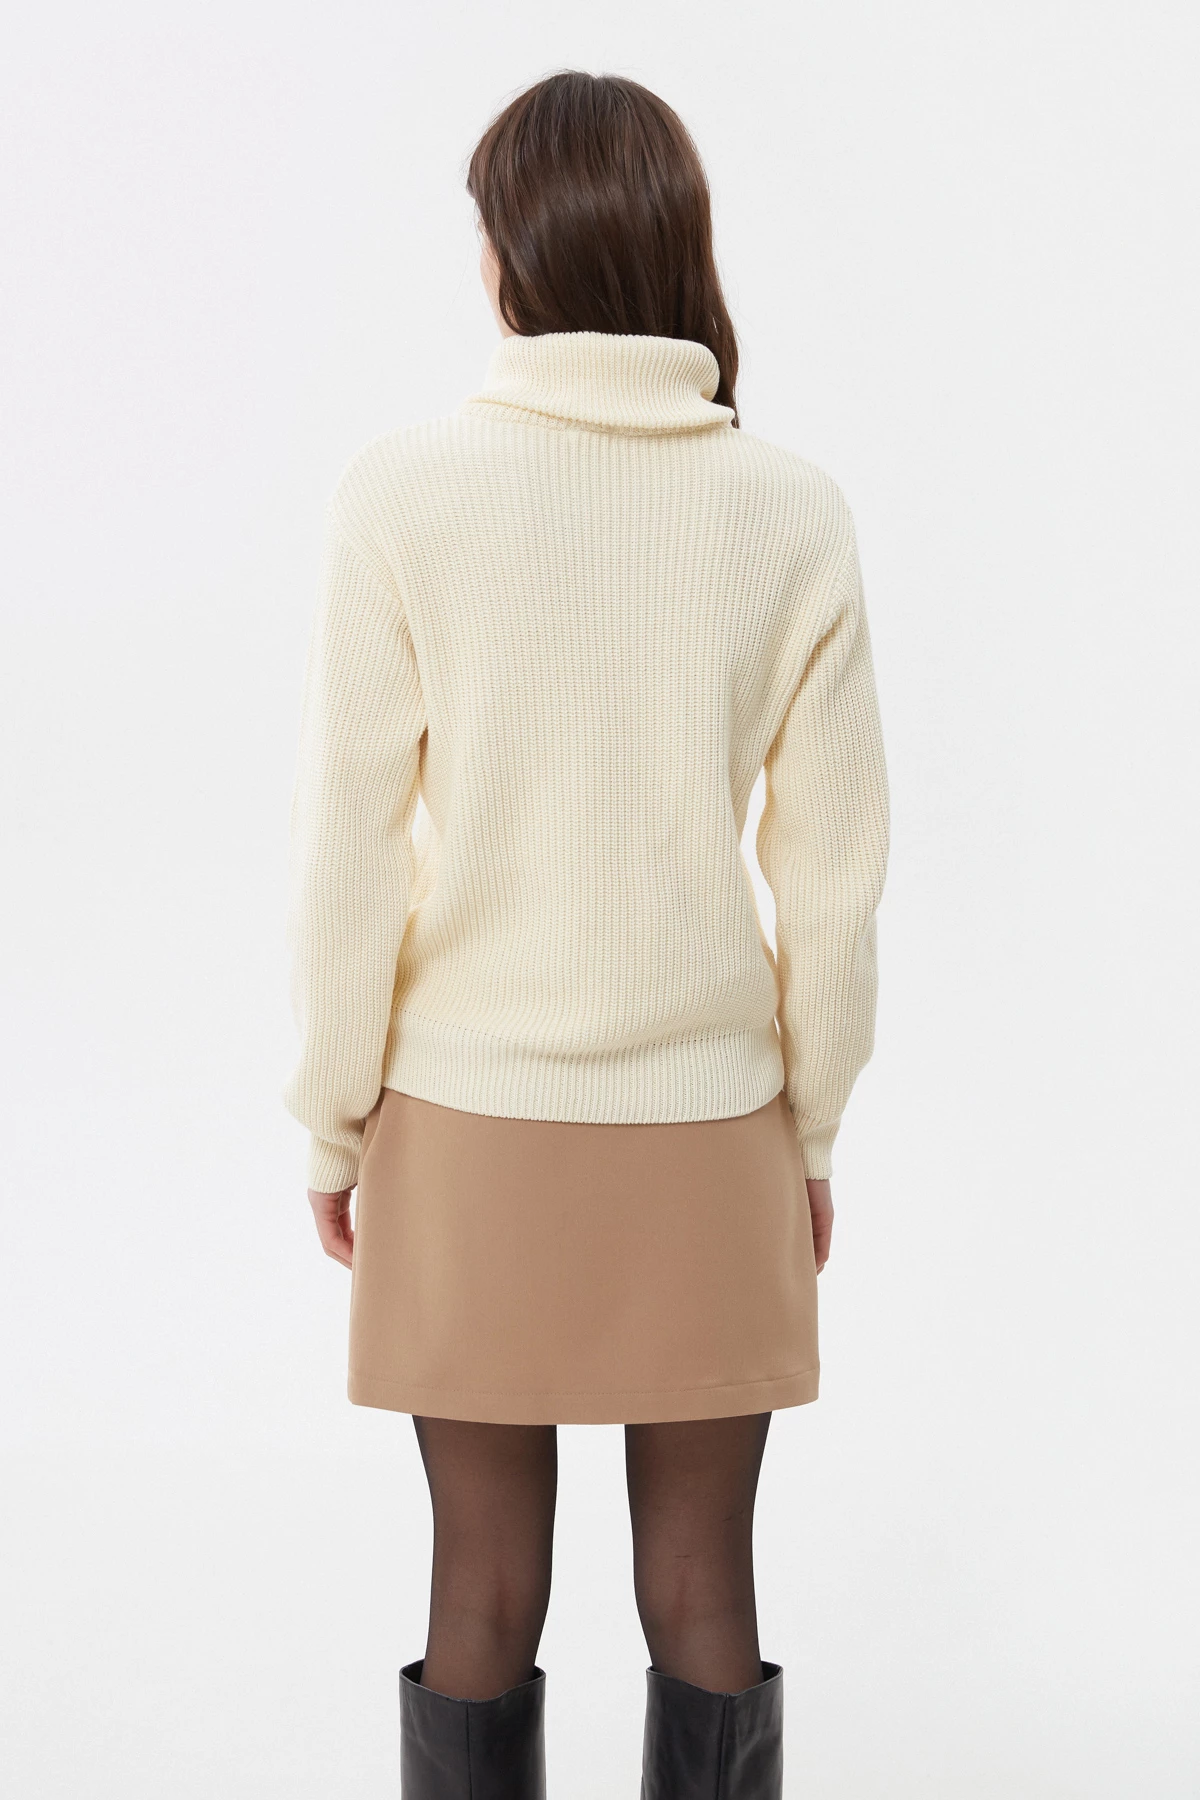 Creamy cotton zip-up knit sweater, photo 5